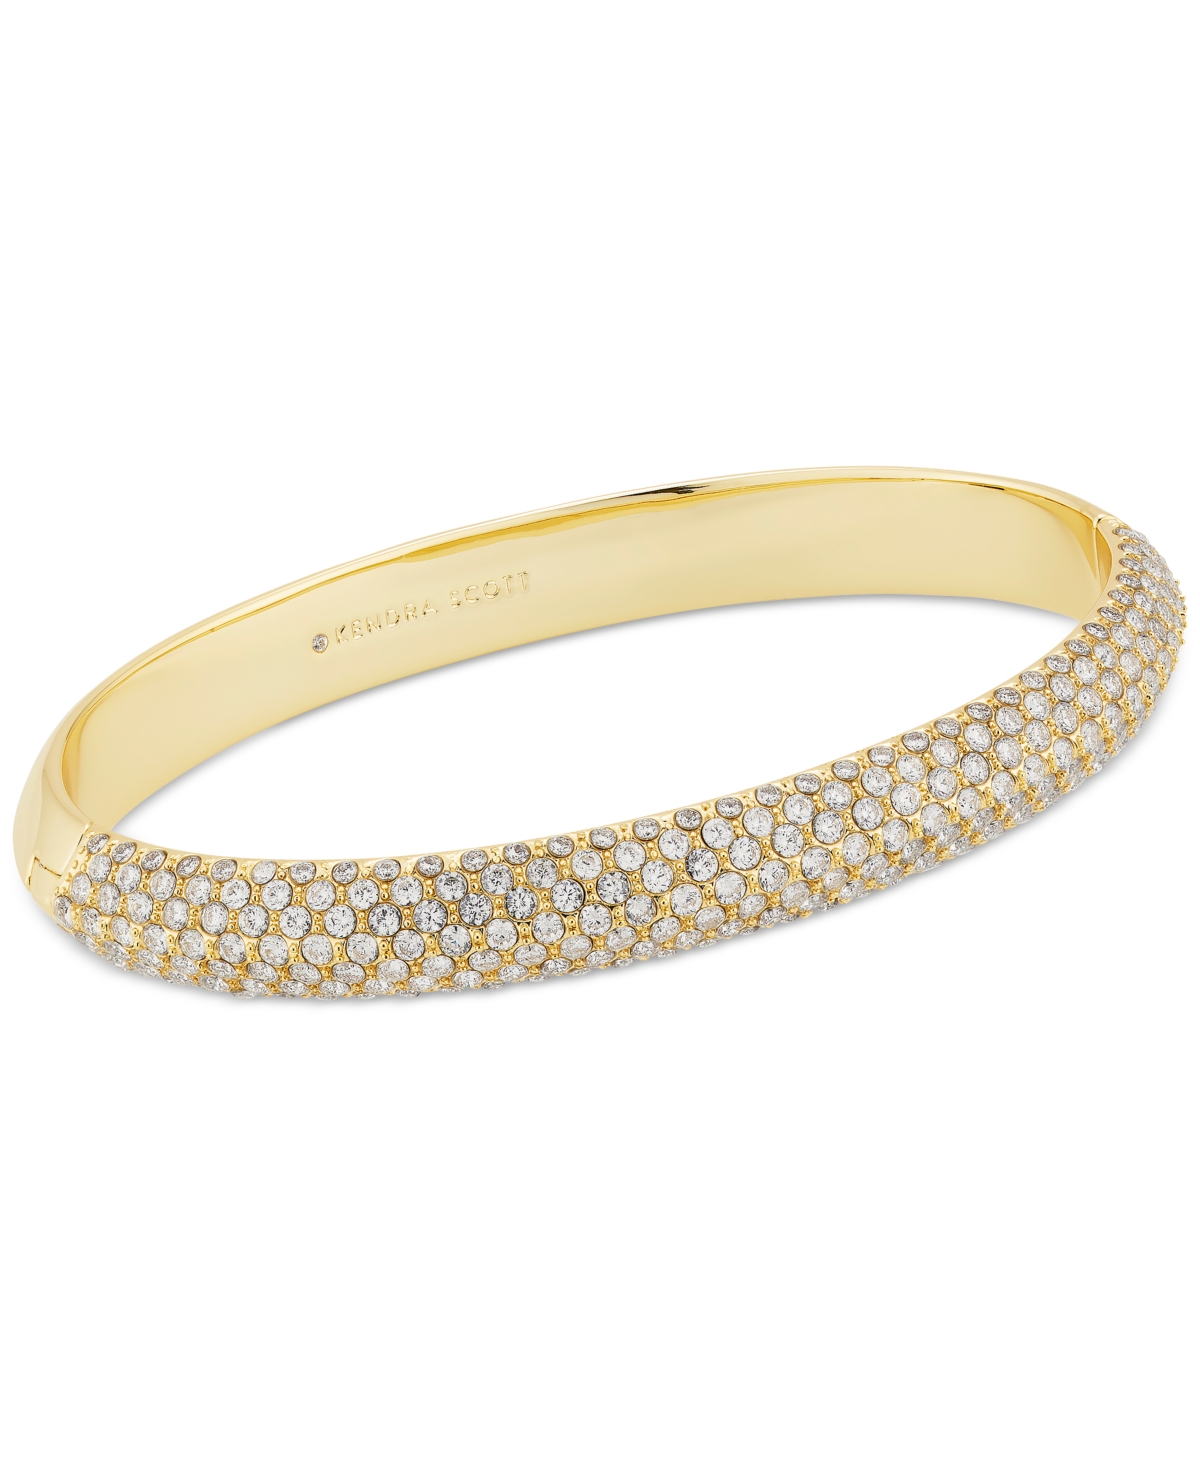 Kendra Scott 14k Gold-plated Pave Bangle Bracelet In Gold/crystal